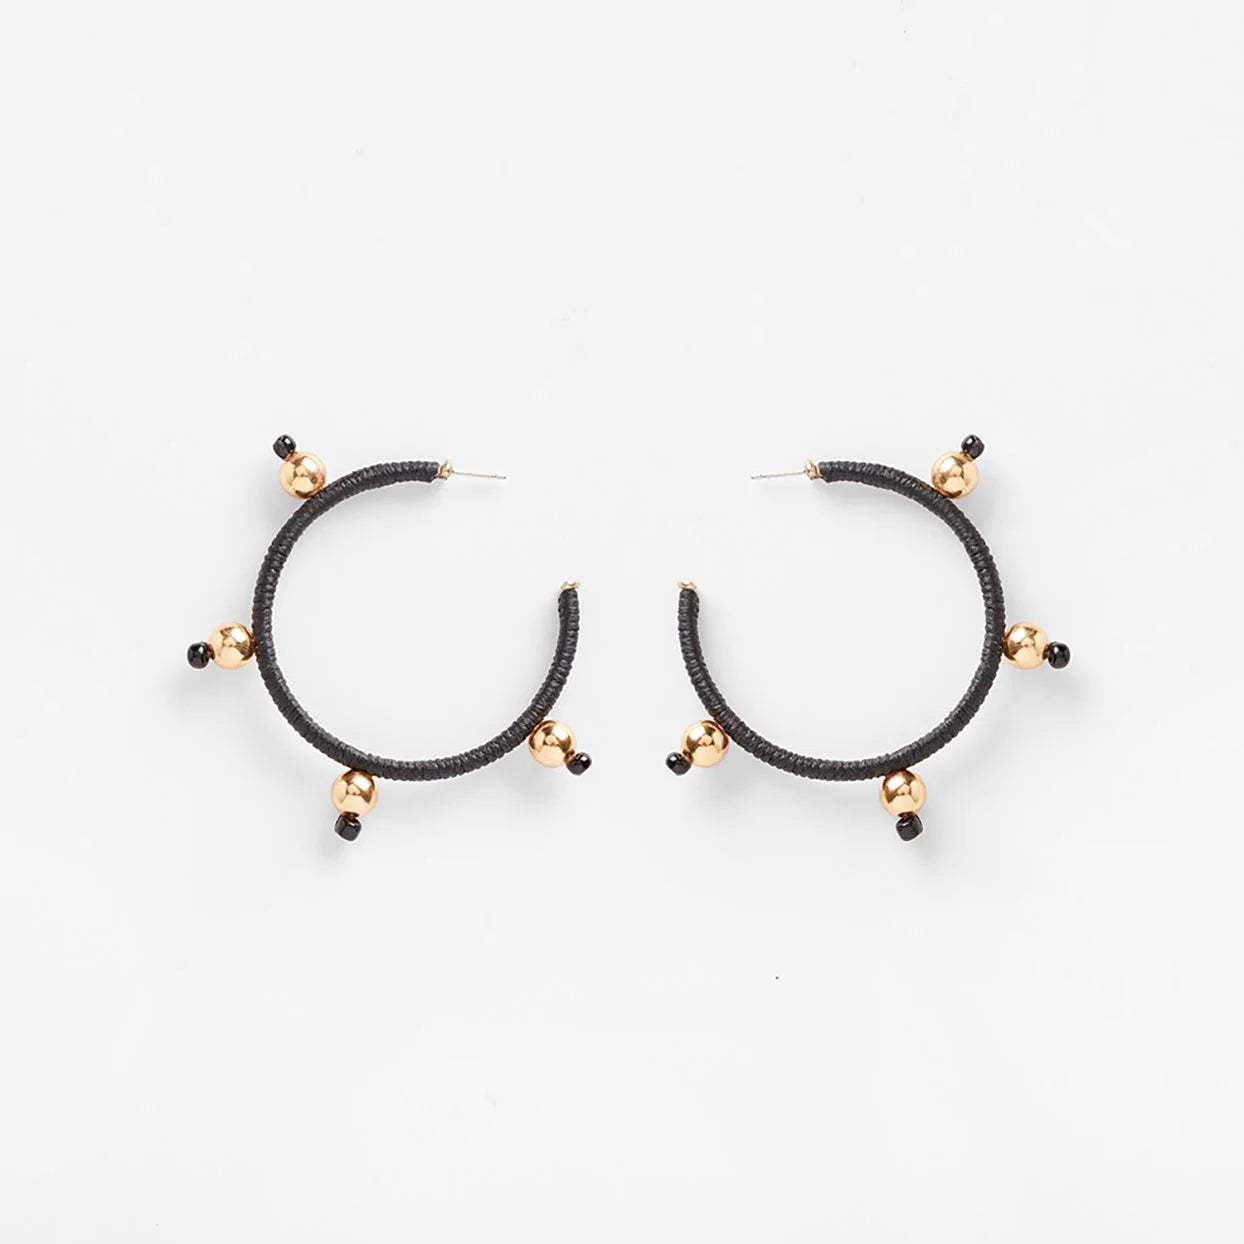 Ouroboros Earrings - Black - Medium